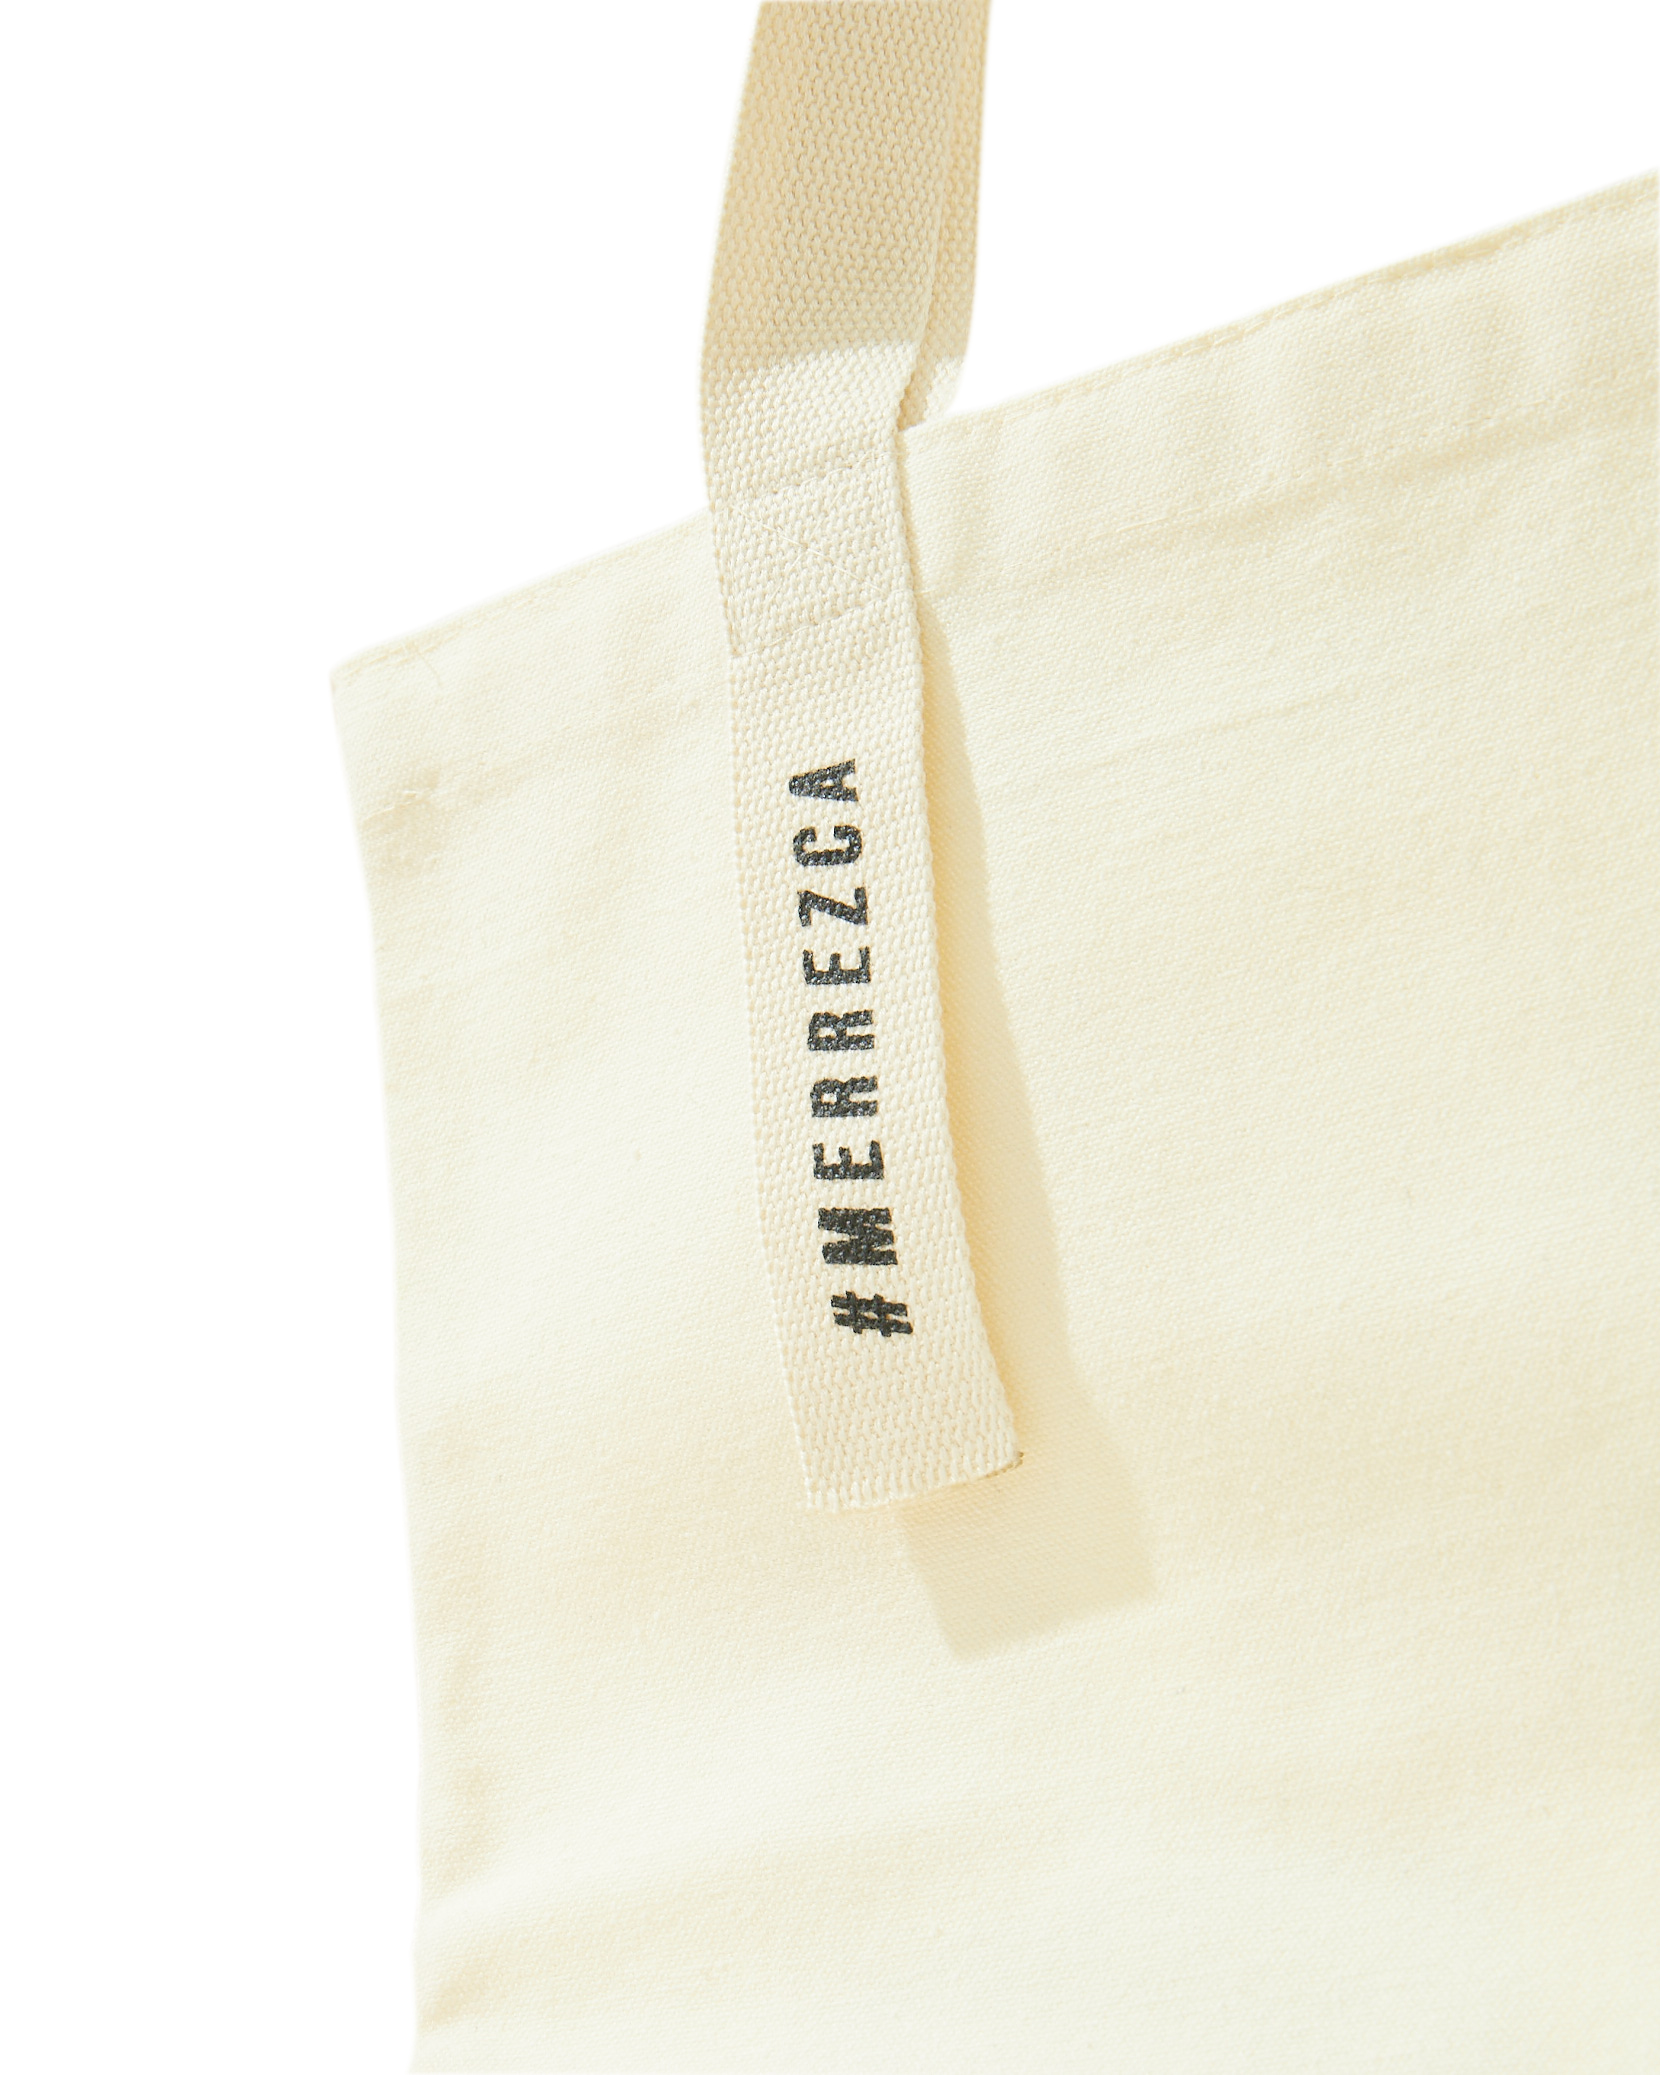 Merrezca Make Your Own Bag